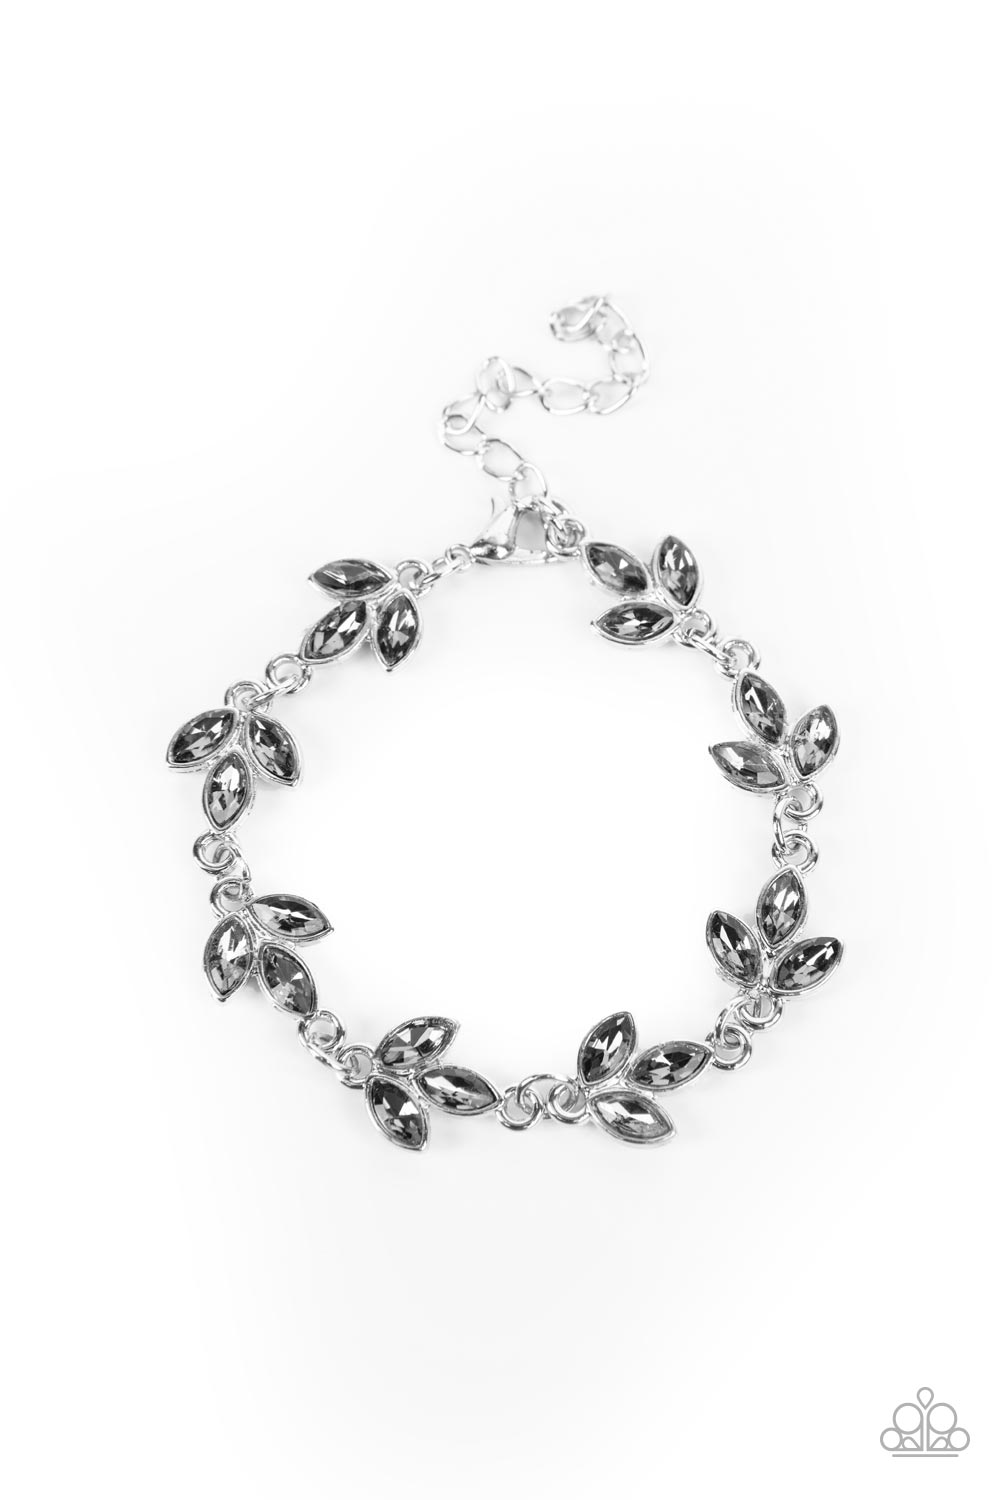 Gala Garland - silver - Paparazzi bracelet